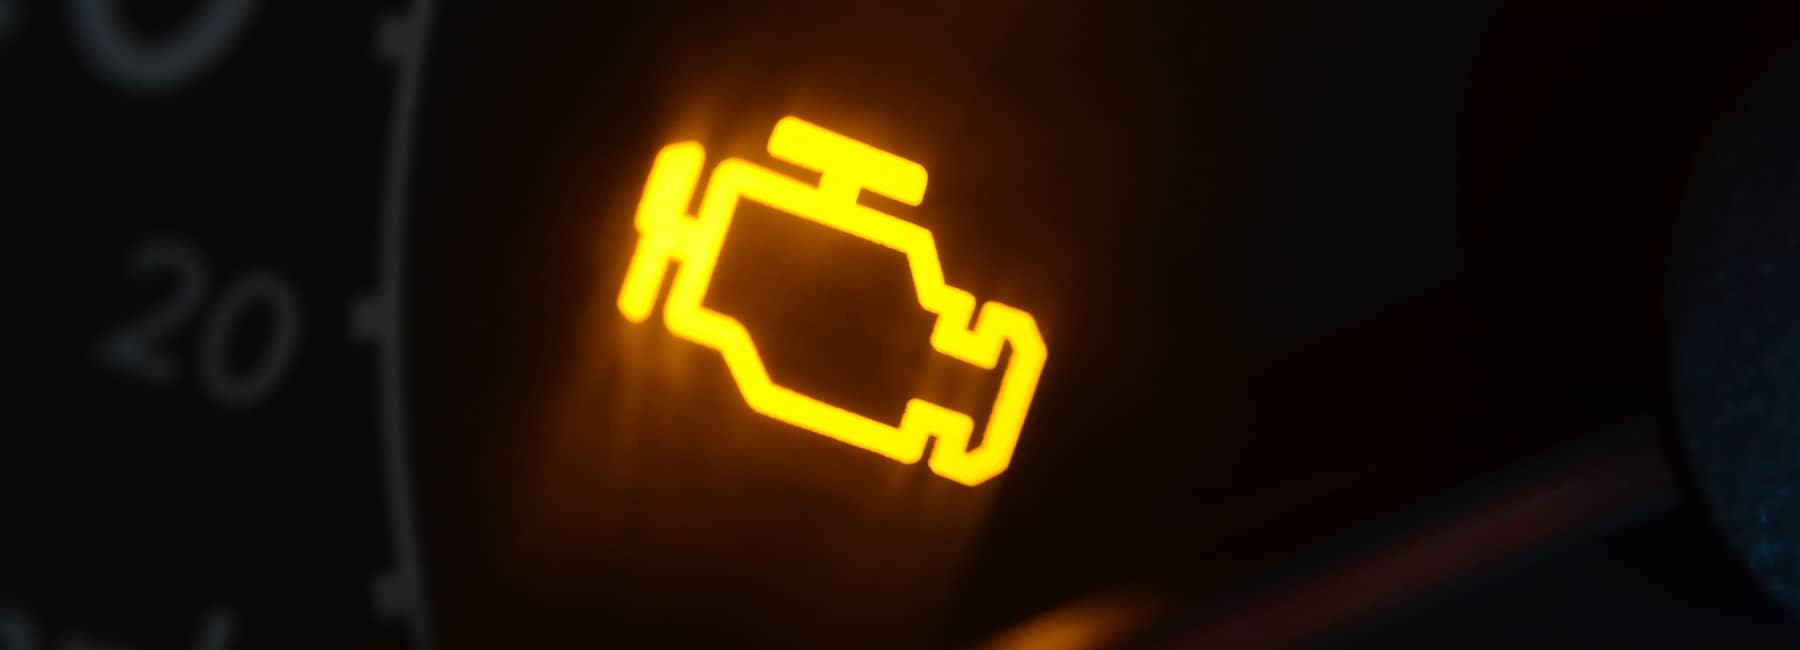 Acura Dashboard Warning Lights Meaning